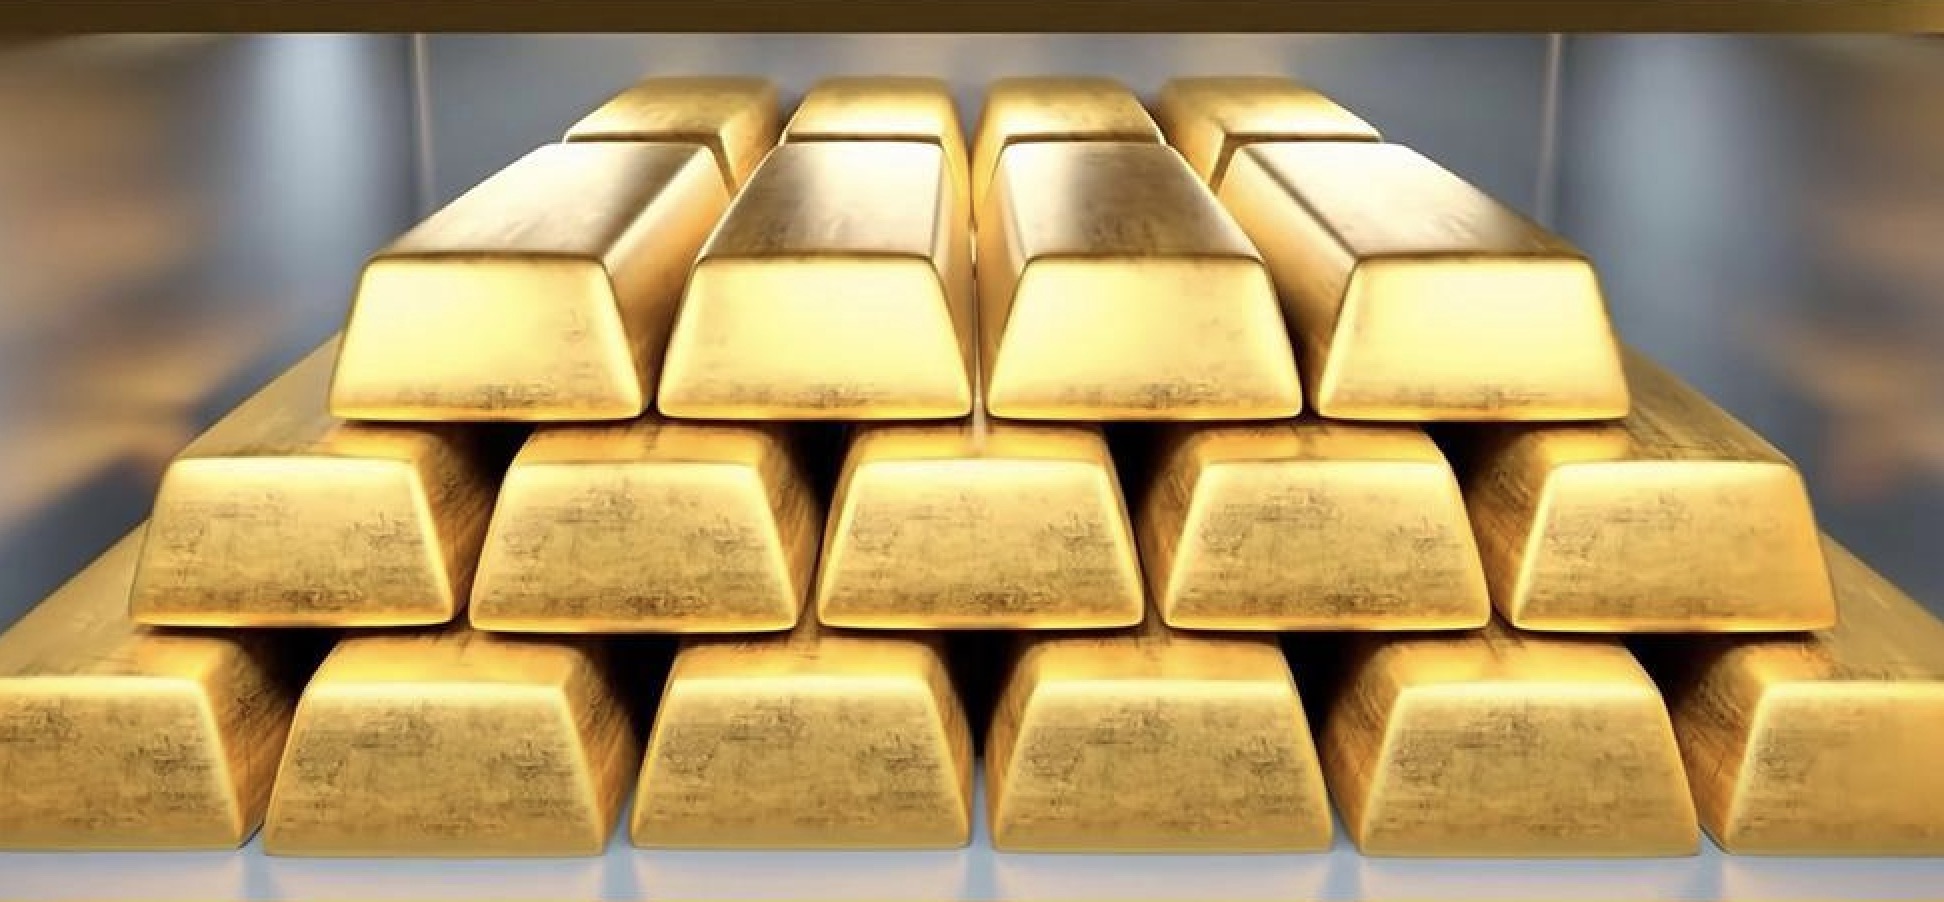 Pengingat perdagangan emas: Harga emas sedikit naik, para pedagang sedang menunggu data inflasi untuk mengukur peluang penurunan suku bunga